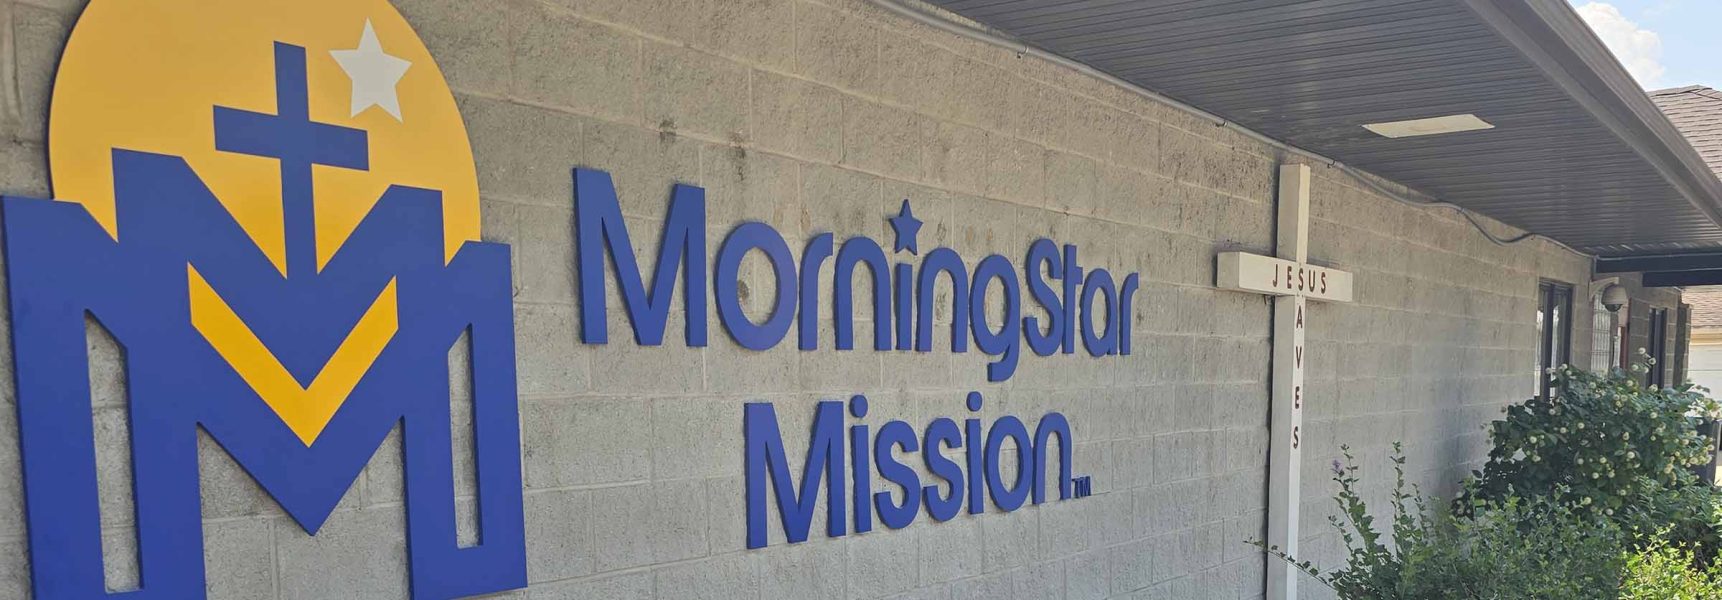 MorningStar Mission Entrance